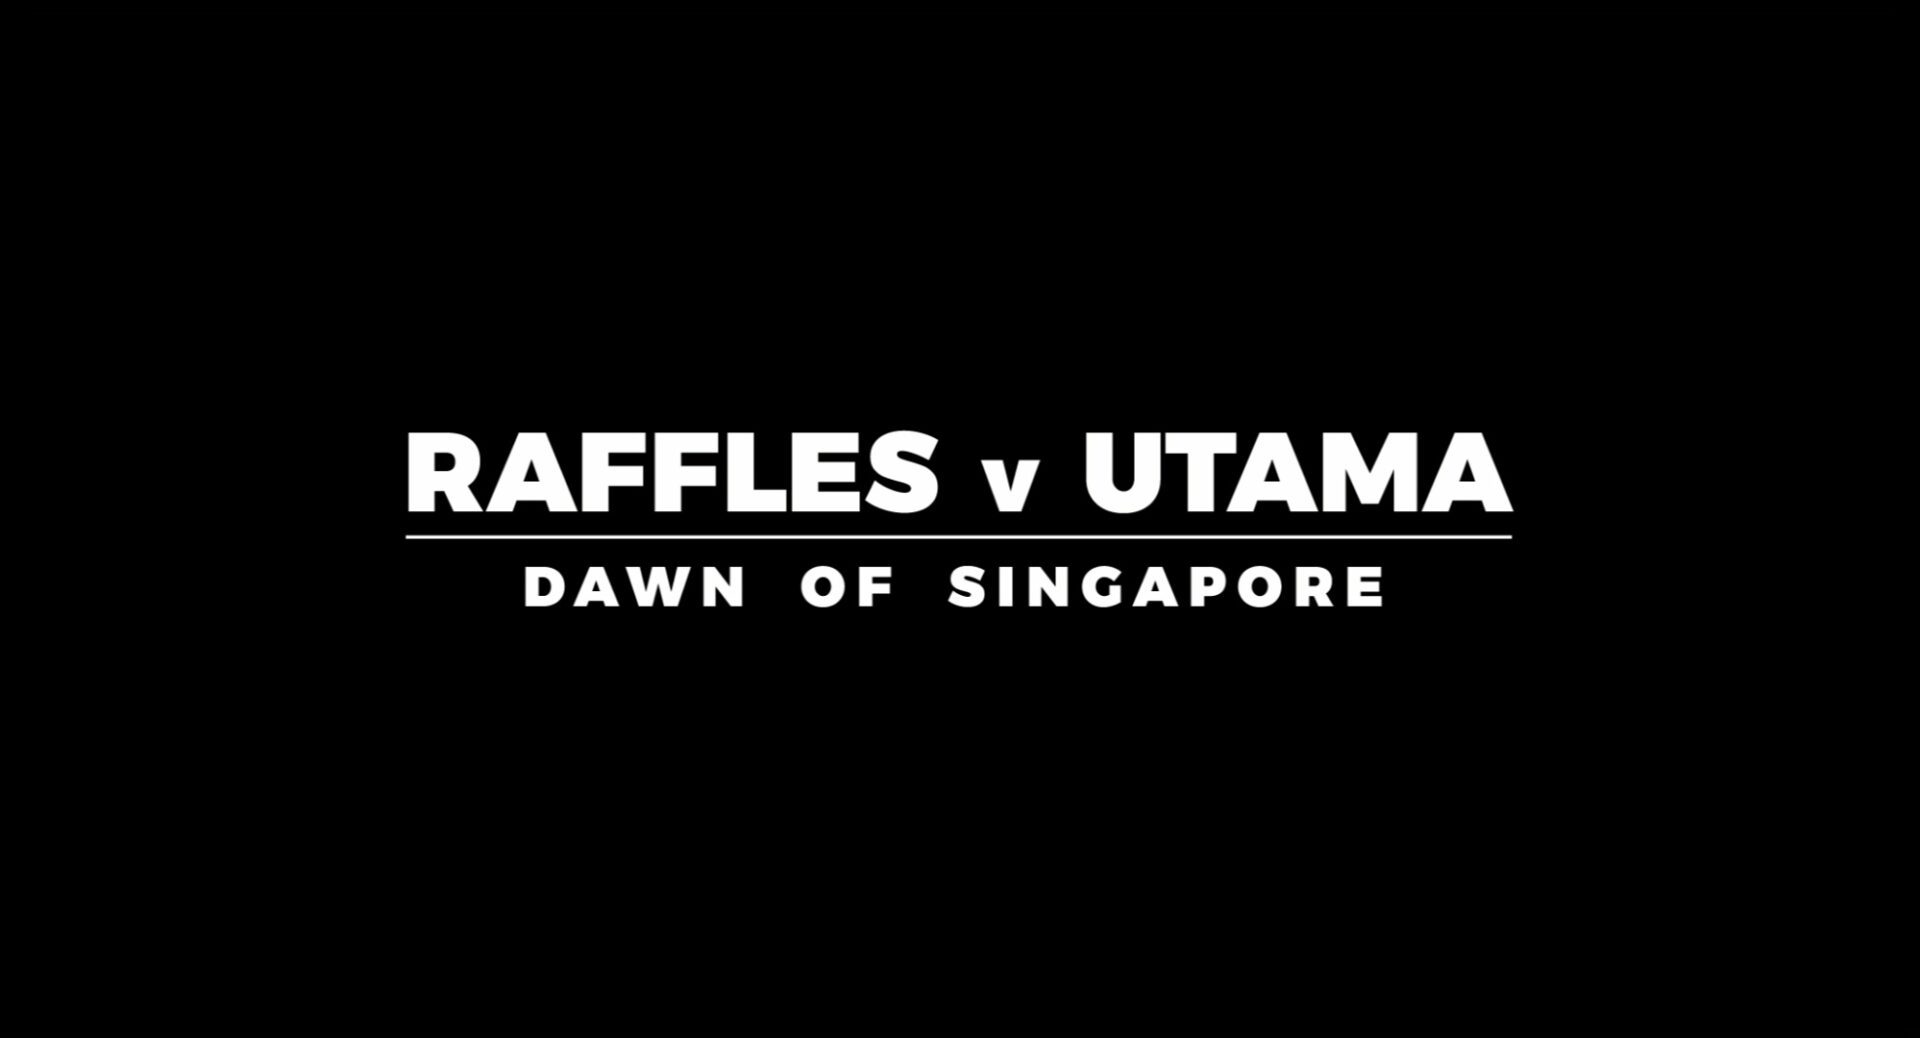 Raffles vs Utama: Dawn of Singapore